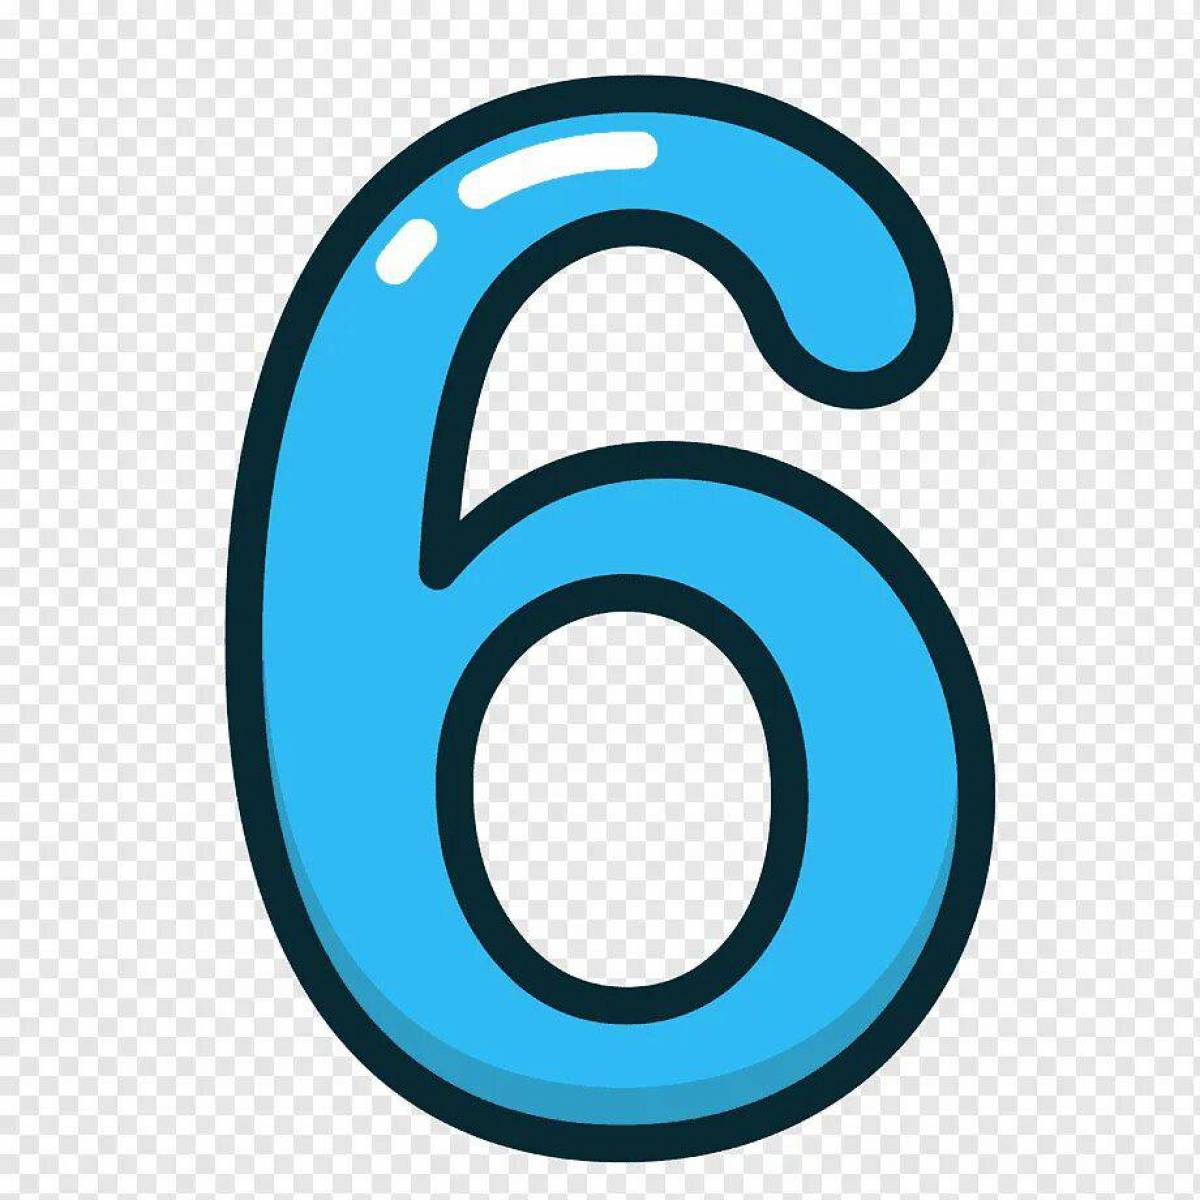 6 без. Цифра 6. Цифра 6 голубая. Шесть на прозрачном фоне. Шестерка цифра.